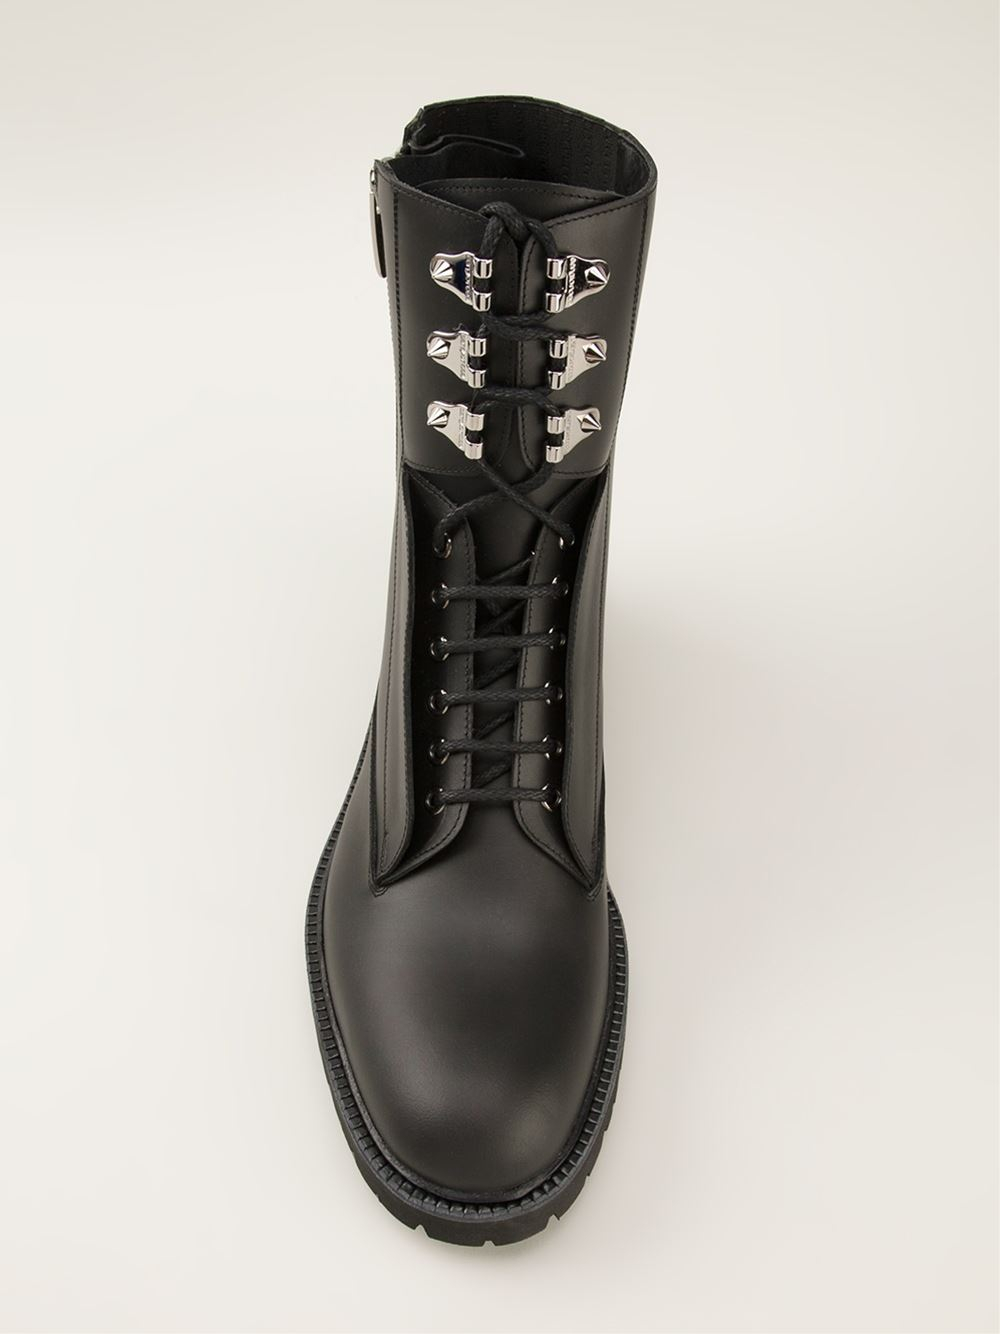 Lyst - Sergio Rossi Rockstar Boots in Black for Men